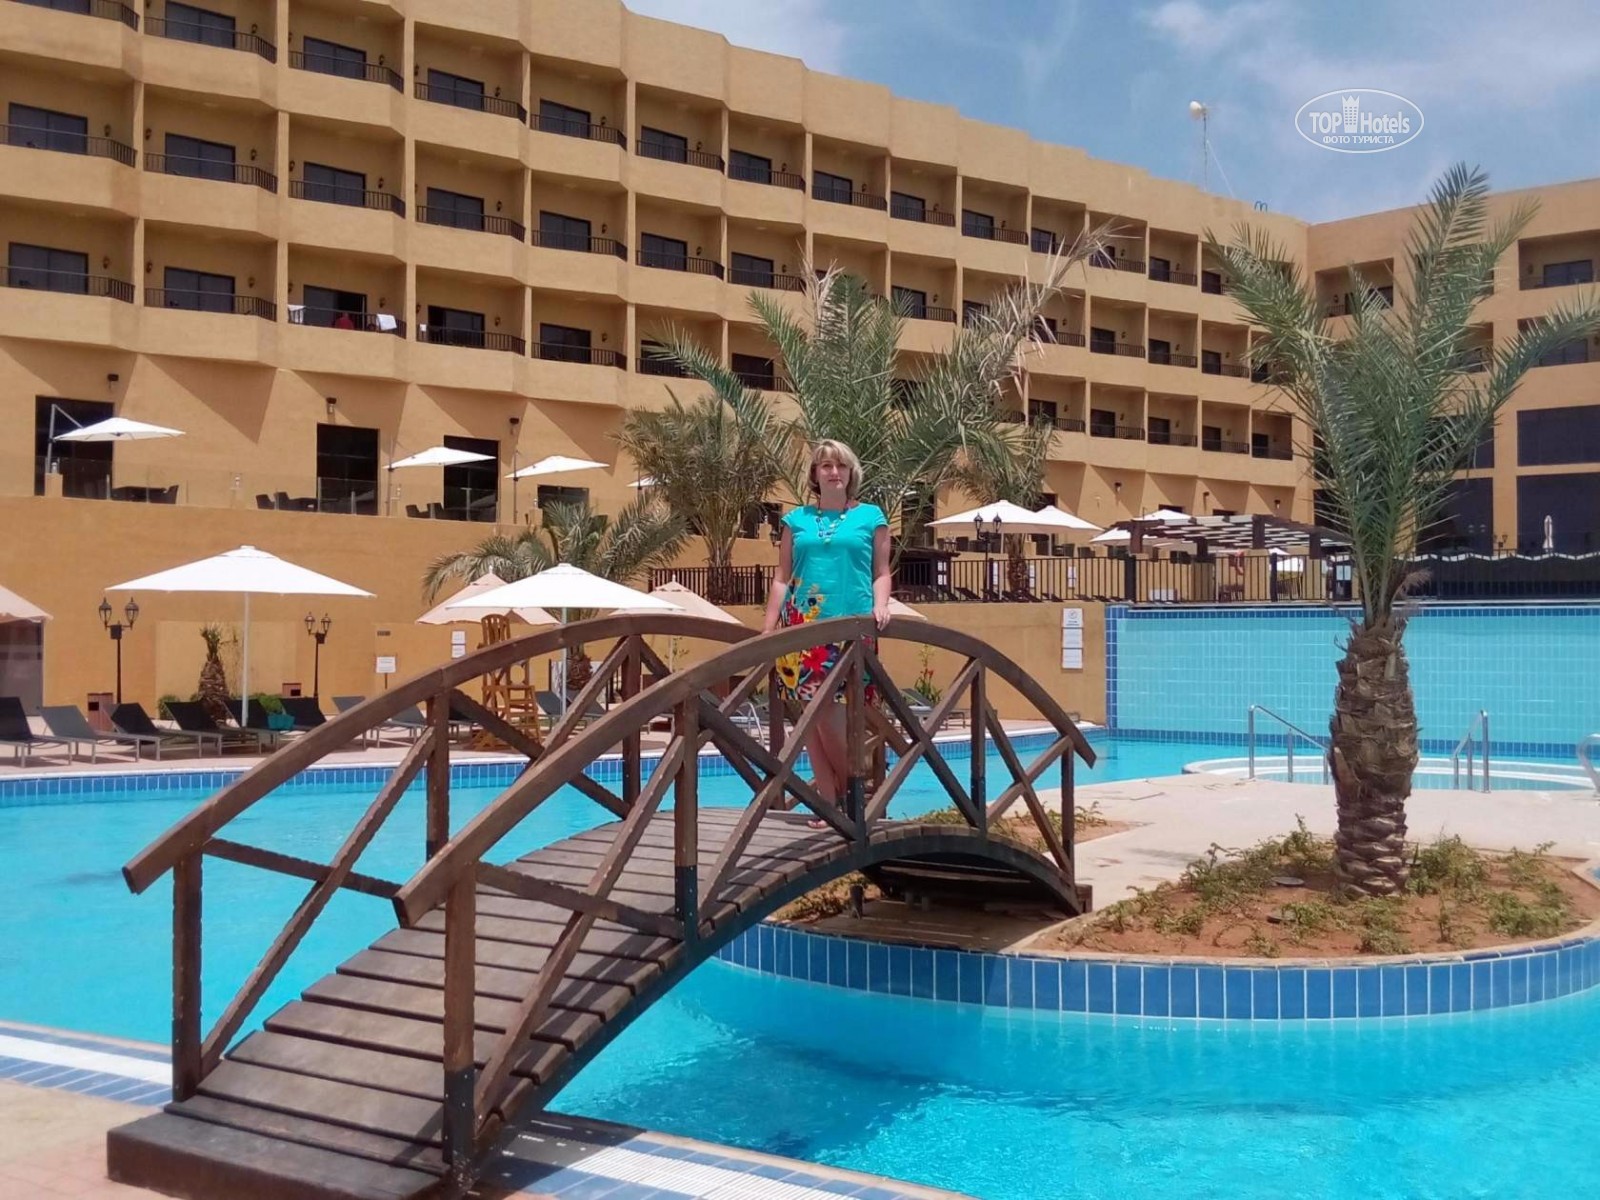 Grand East Hotel, Dead Sea